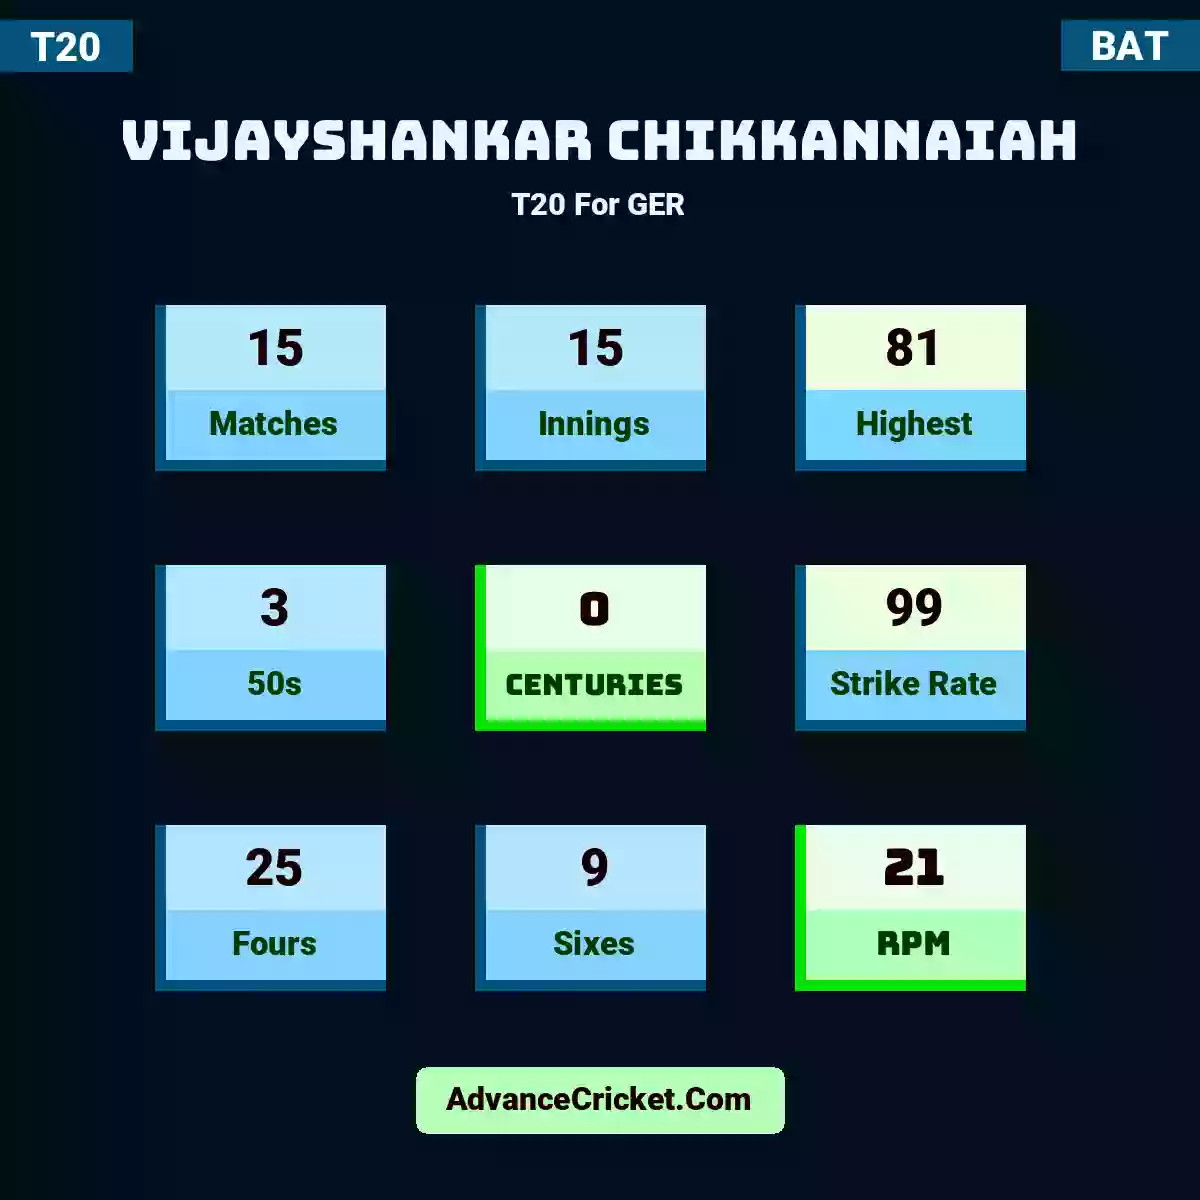 Vijayshankar Chikkannaiah T20  For GER, Vijayshankar Chikkannaiah played 15 matches, scored 81 runs as highest, 3 half-centuries, and 0 centuries, with a strike rate of 99. V.Chikkannaiah hit 25 fours and 9 sixes, with an RPM of 21.